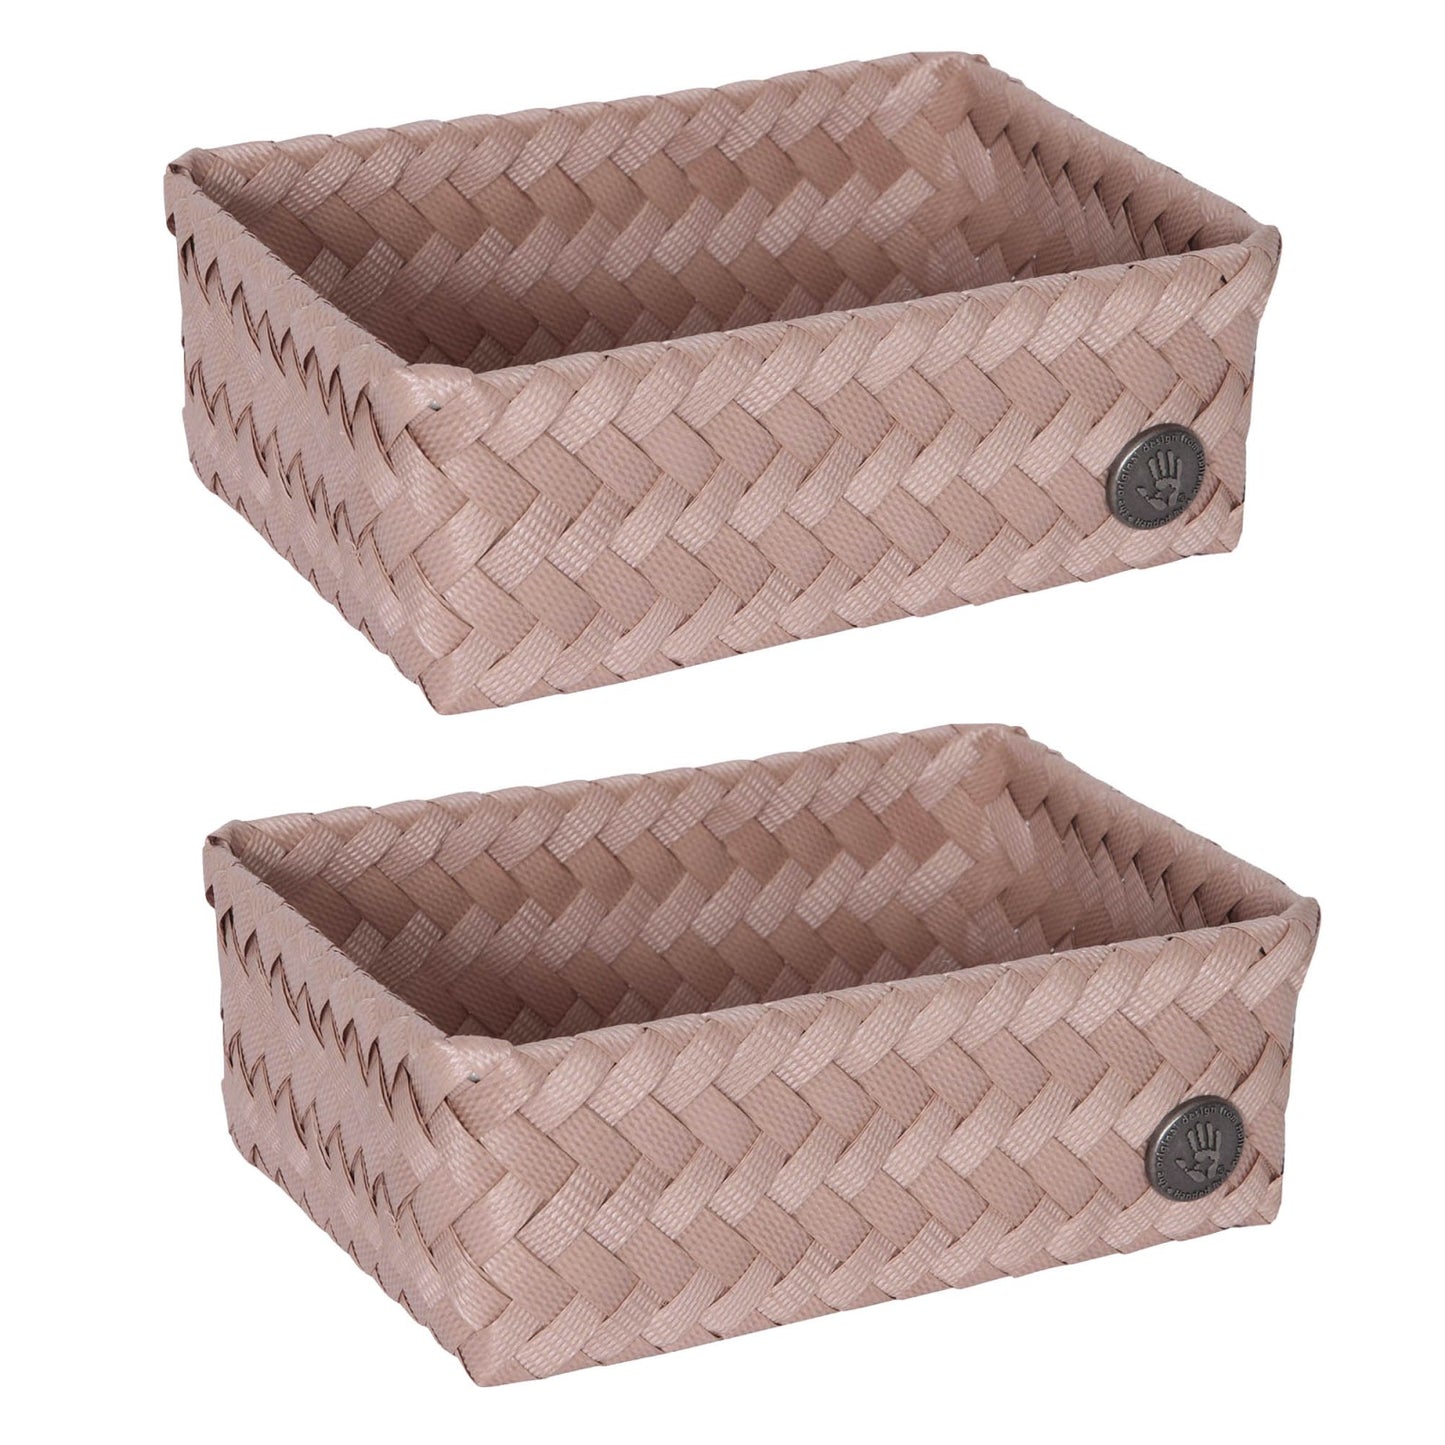 Fit Small - Open basket rectangular